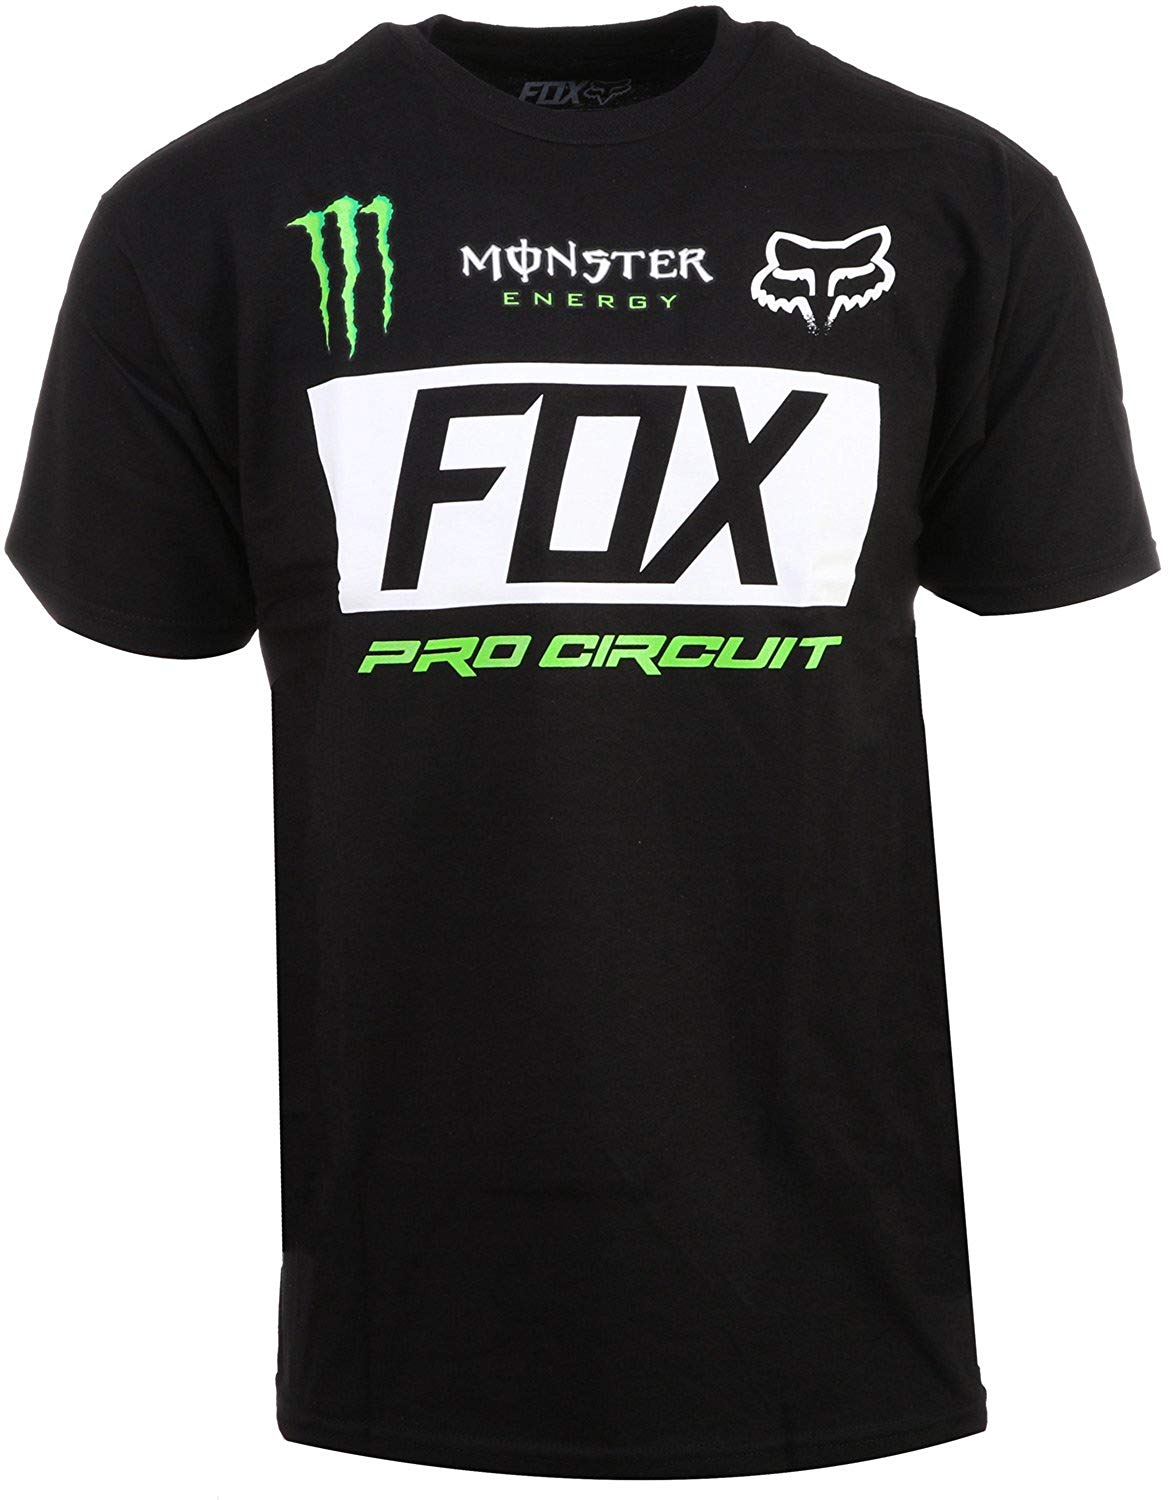 Fox Racing with Monsters Logo - Amazon.com: Fox Racing Mens Monster Paddock Short-Sleeve Shirt: Clothing